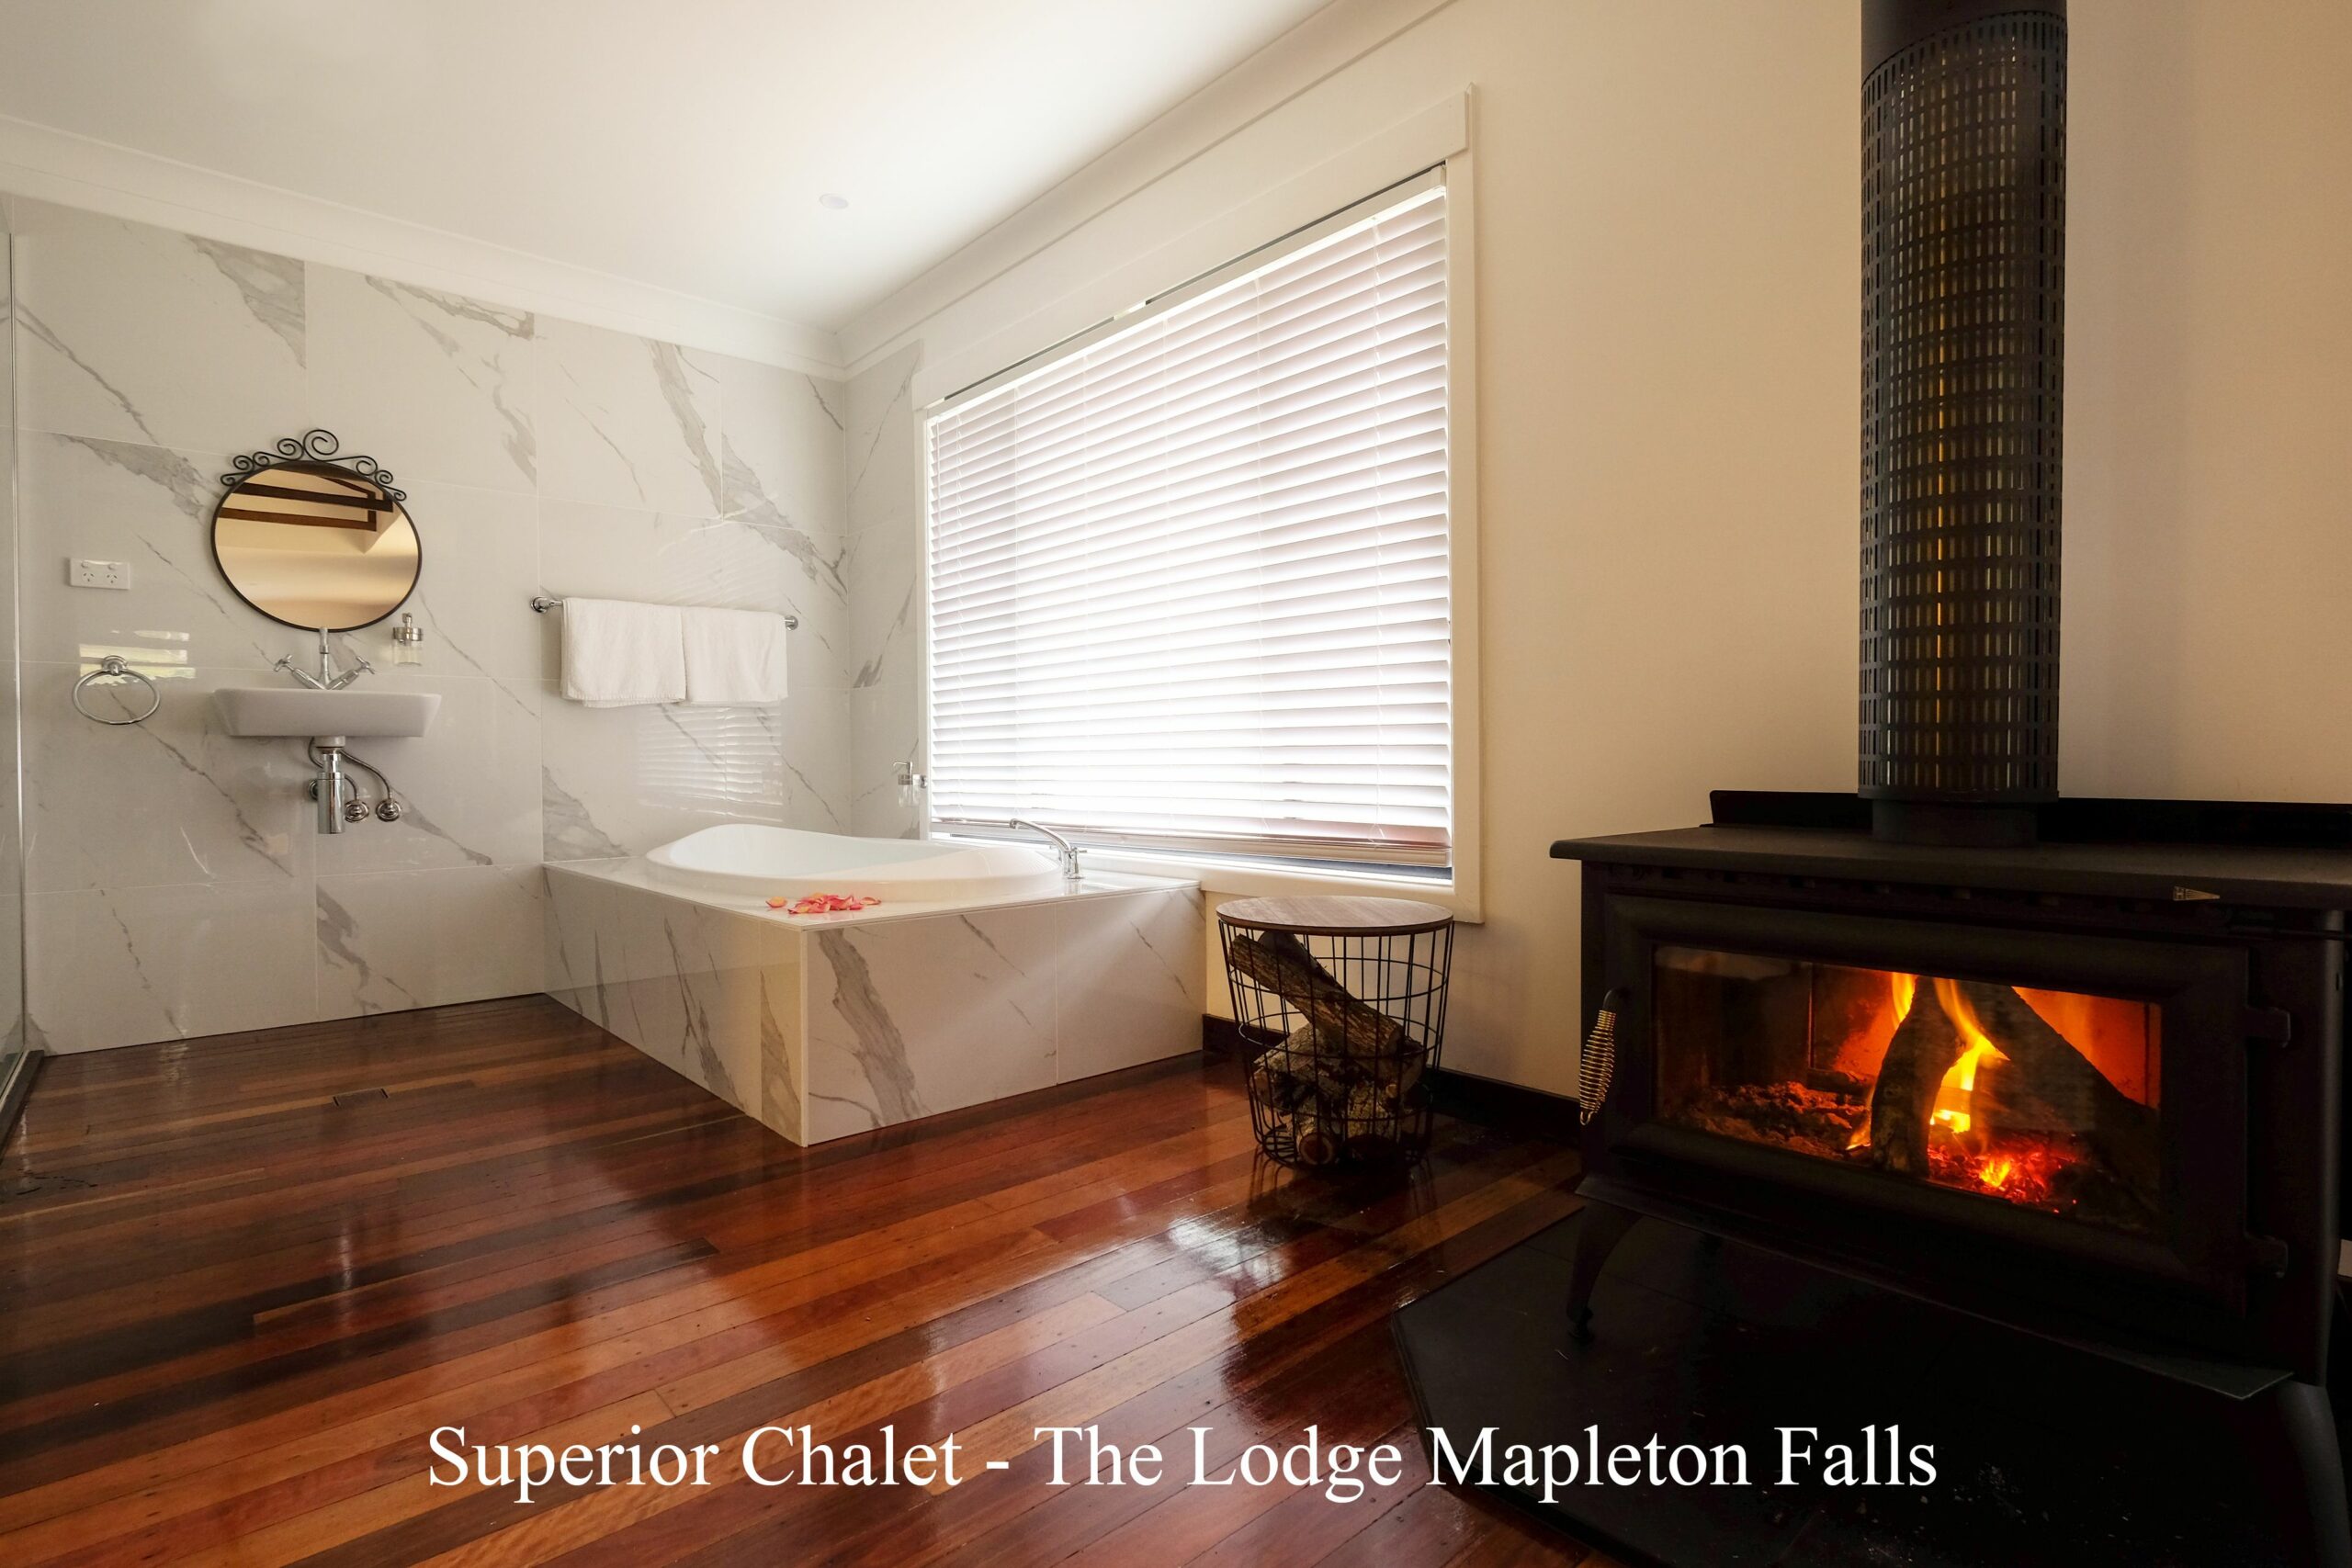 The Lodge Mapleton Falls